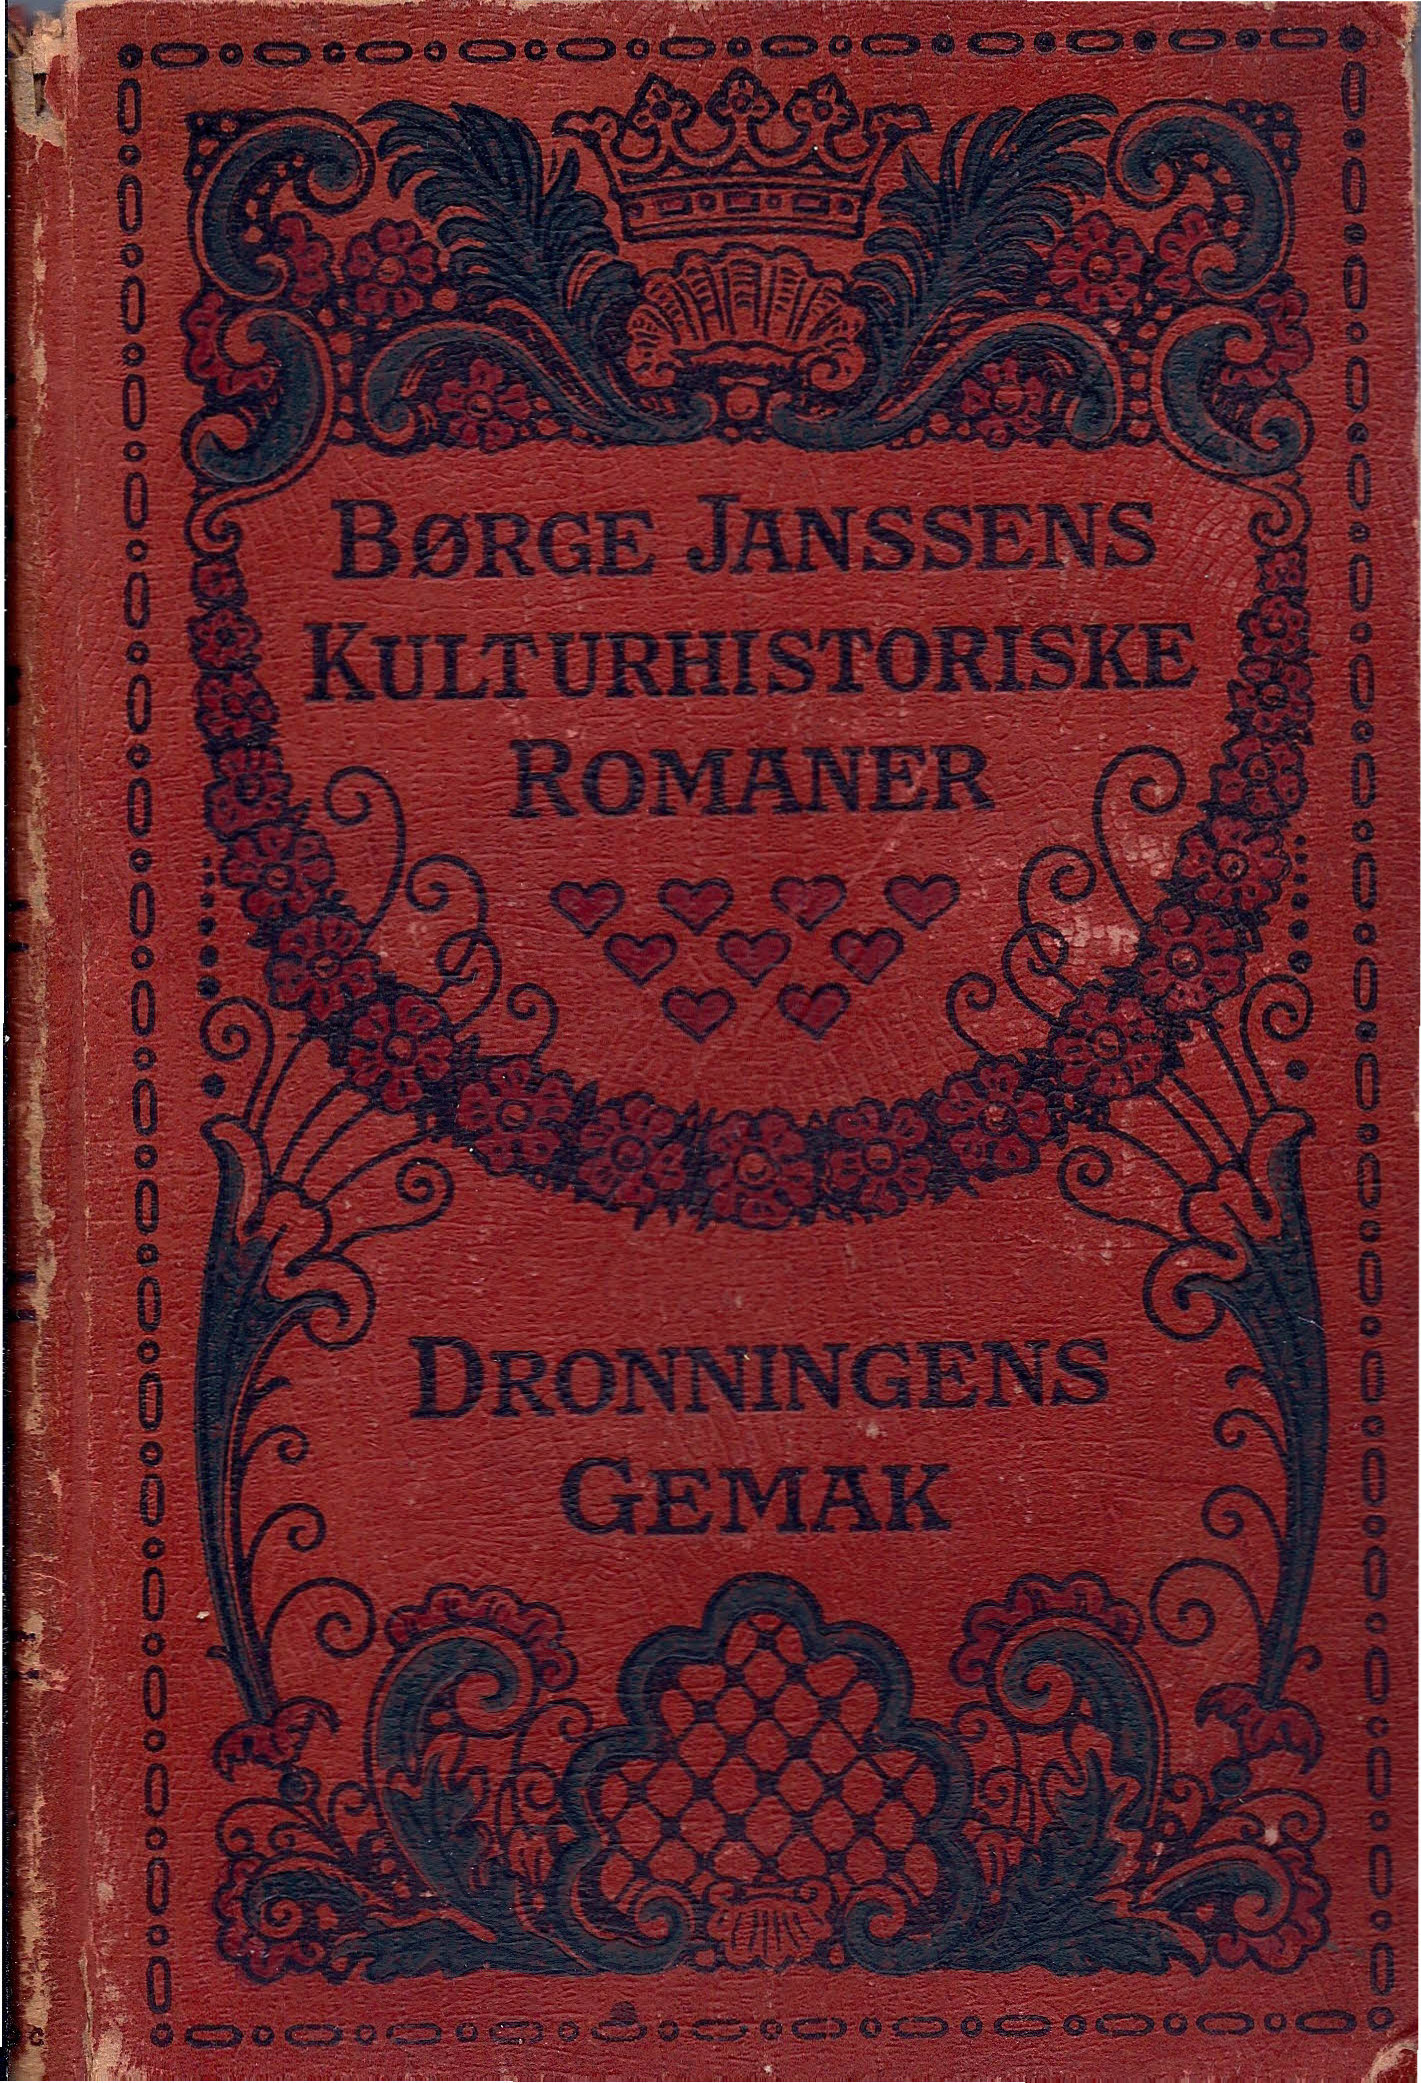 Dronningens gemak - Børge Janssens kulturhistoriske romaner 1920-1